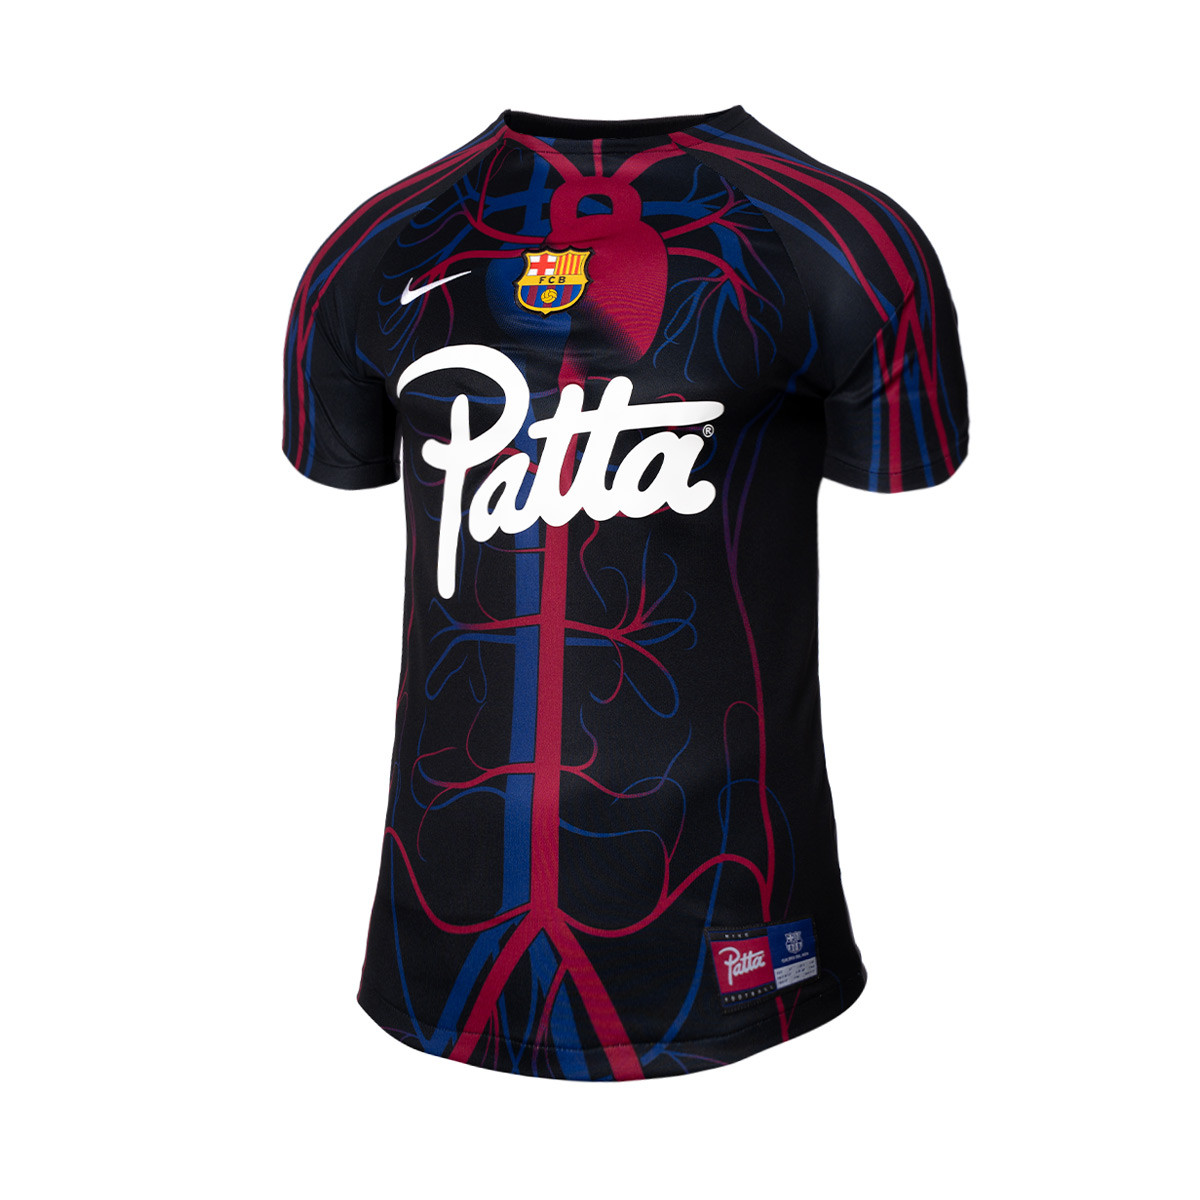 Jersey Nike FC Barcelona x Patta Special Edition  Black